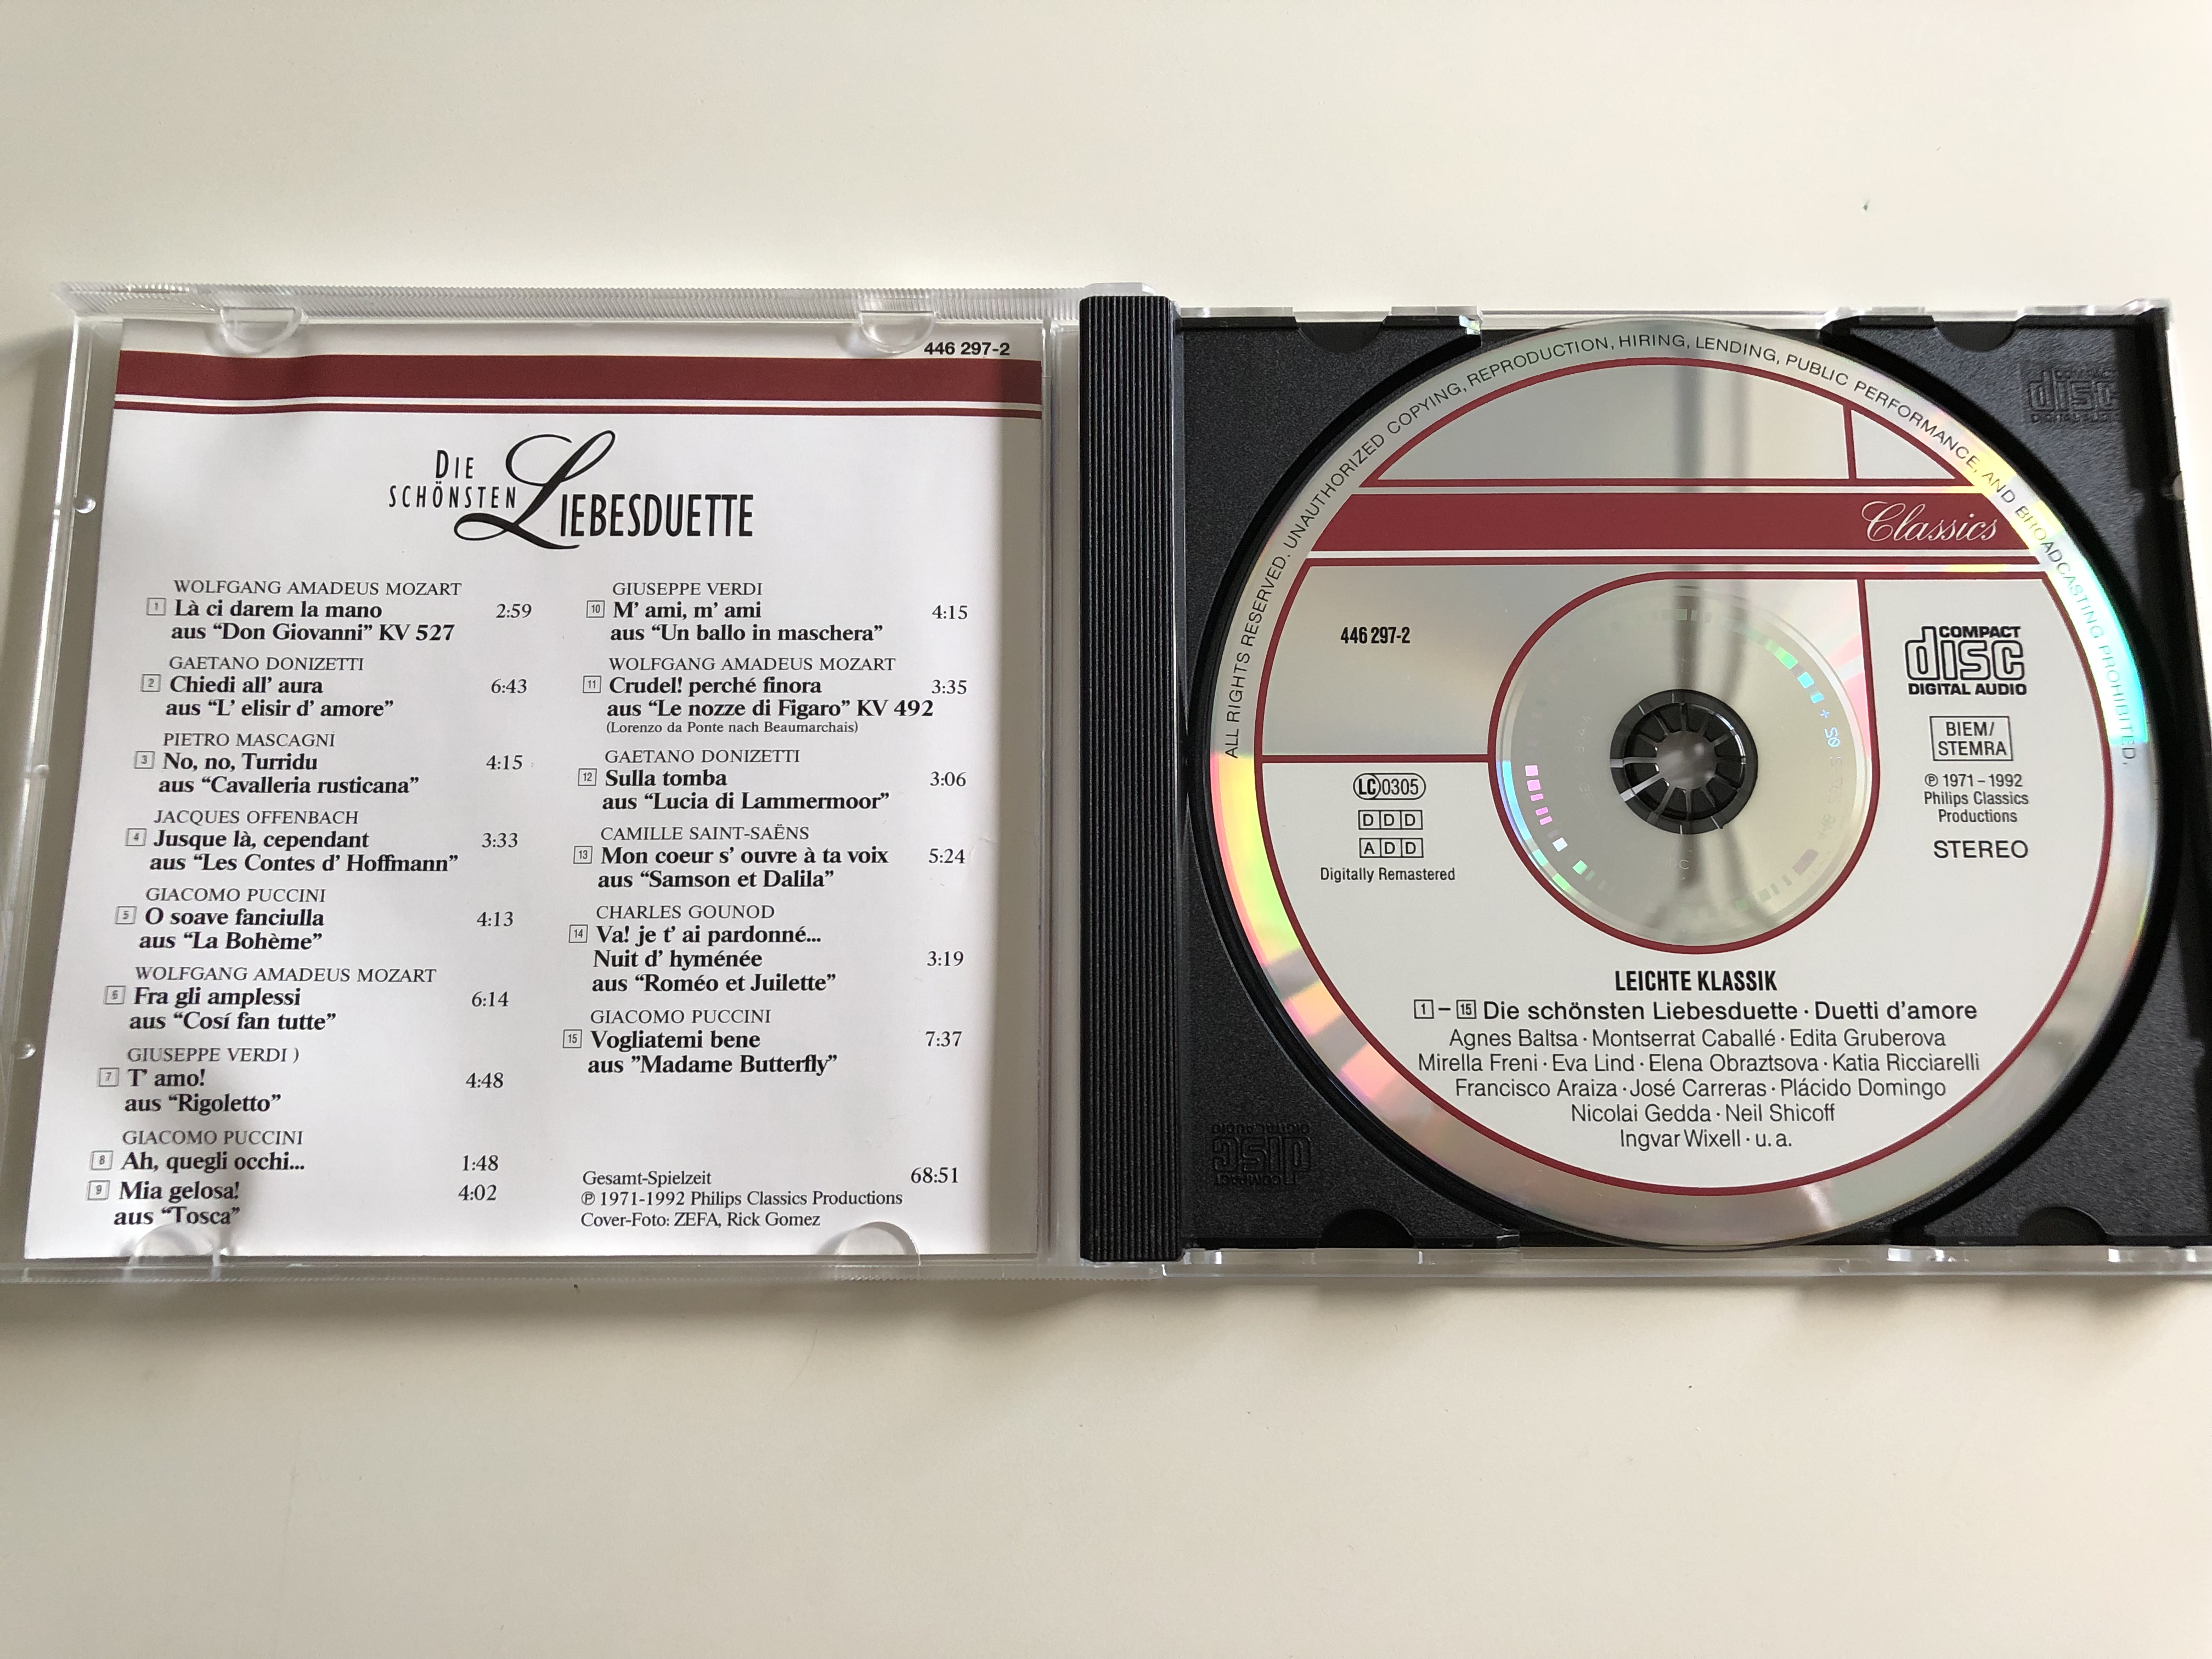 die-sch-nsten-liebesduette-duetti-d-amore-leiichte-klassik-agnes-baltsa-montserrat-caball-katia-ricciarelli-jos-carreras-placido-domingo-audio-cd-1992-3-.jpg